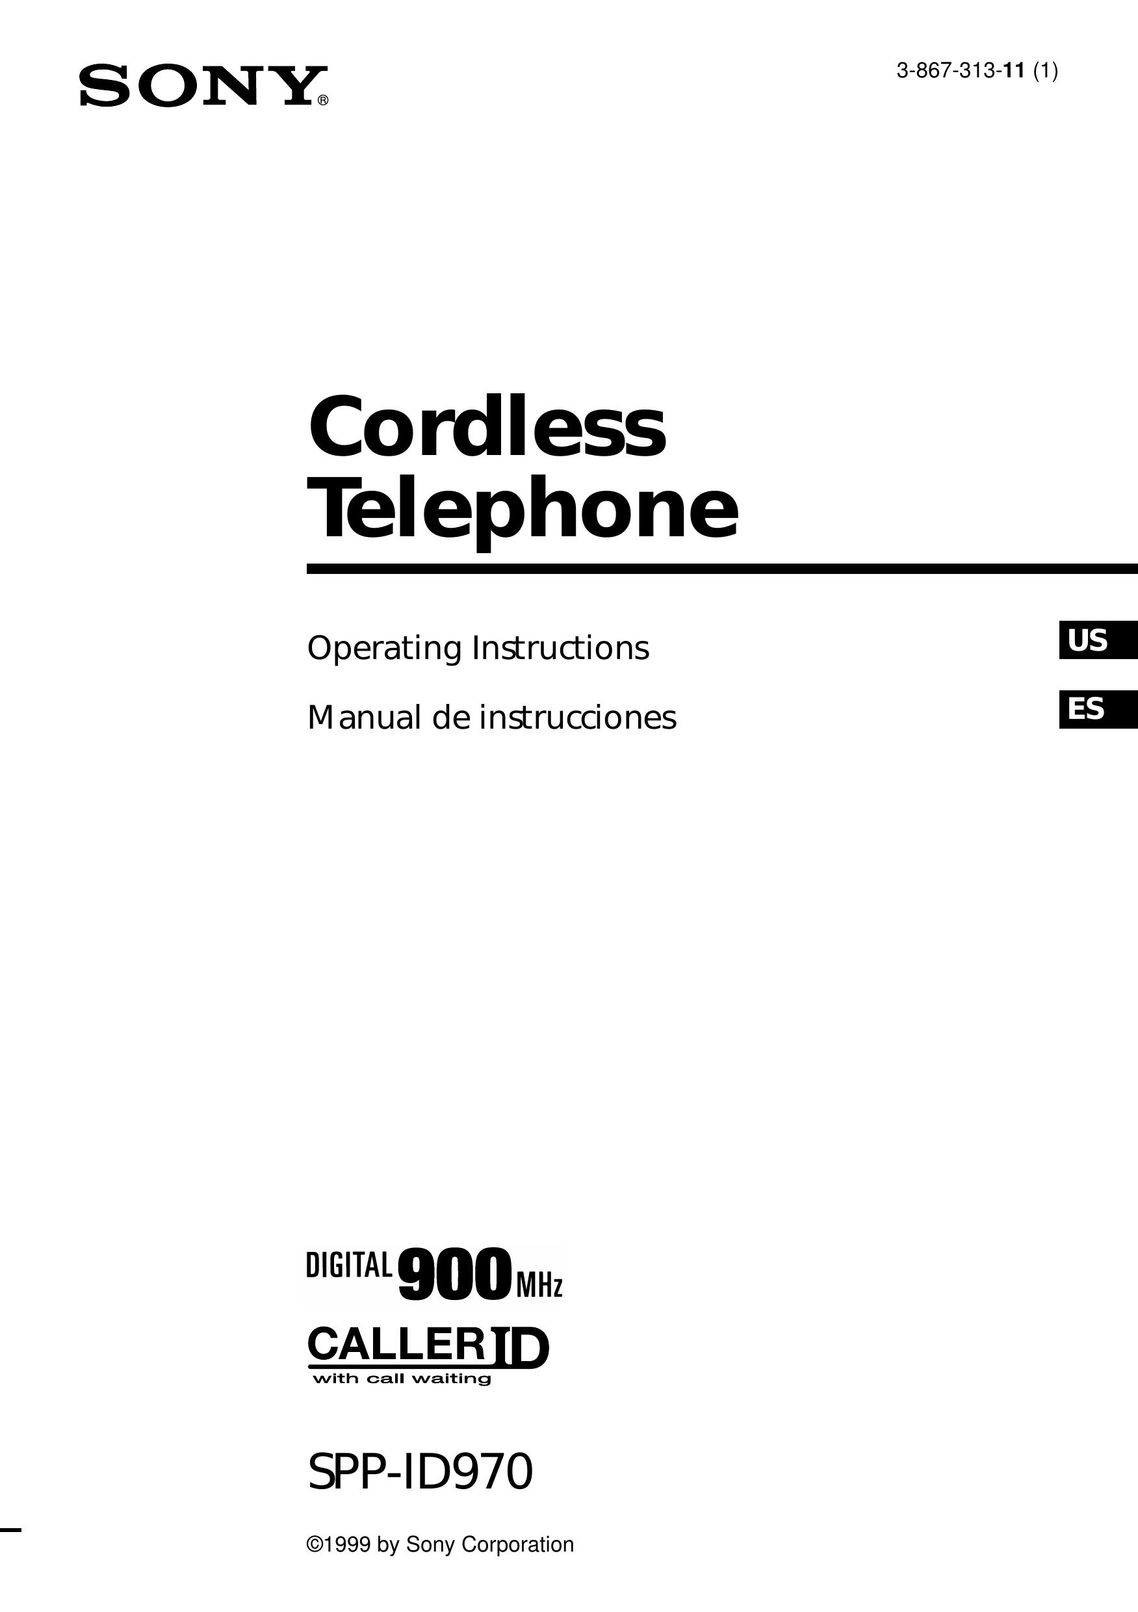 Sony SPP-ID970 Cordless Telephone User Manual